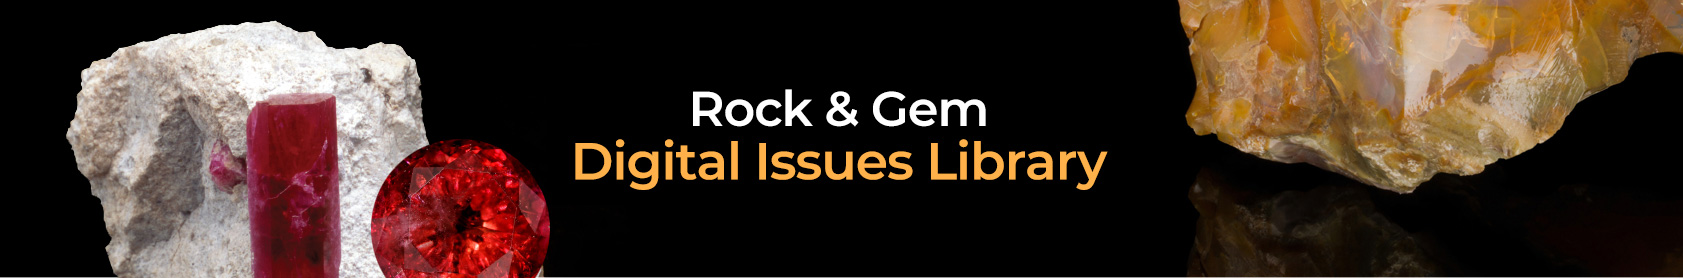 Rock & Gem Illustrious Opals Digital Issue Library Banner